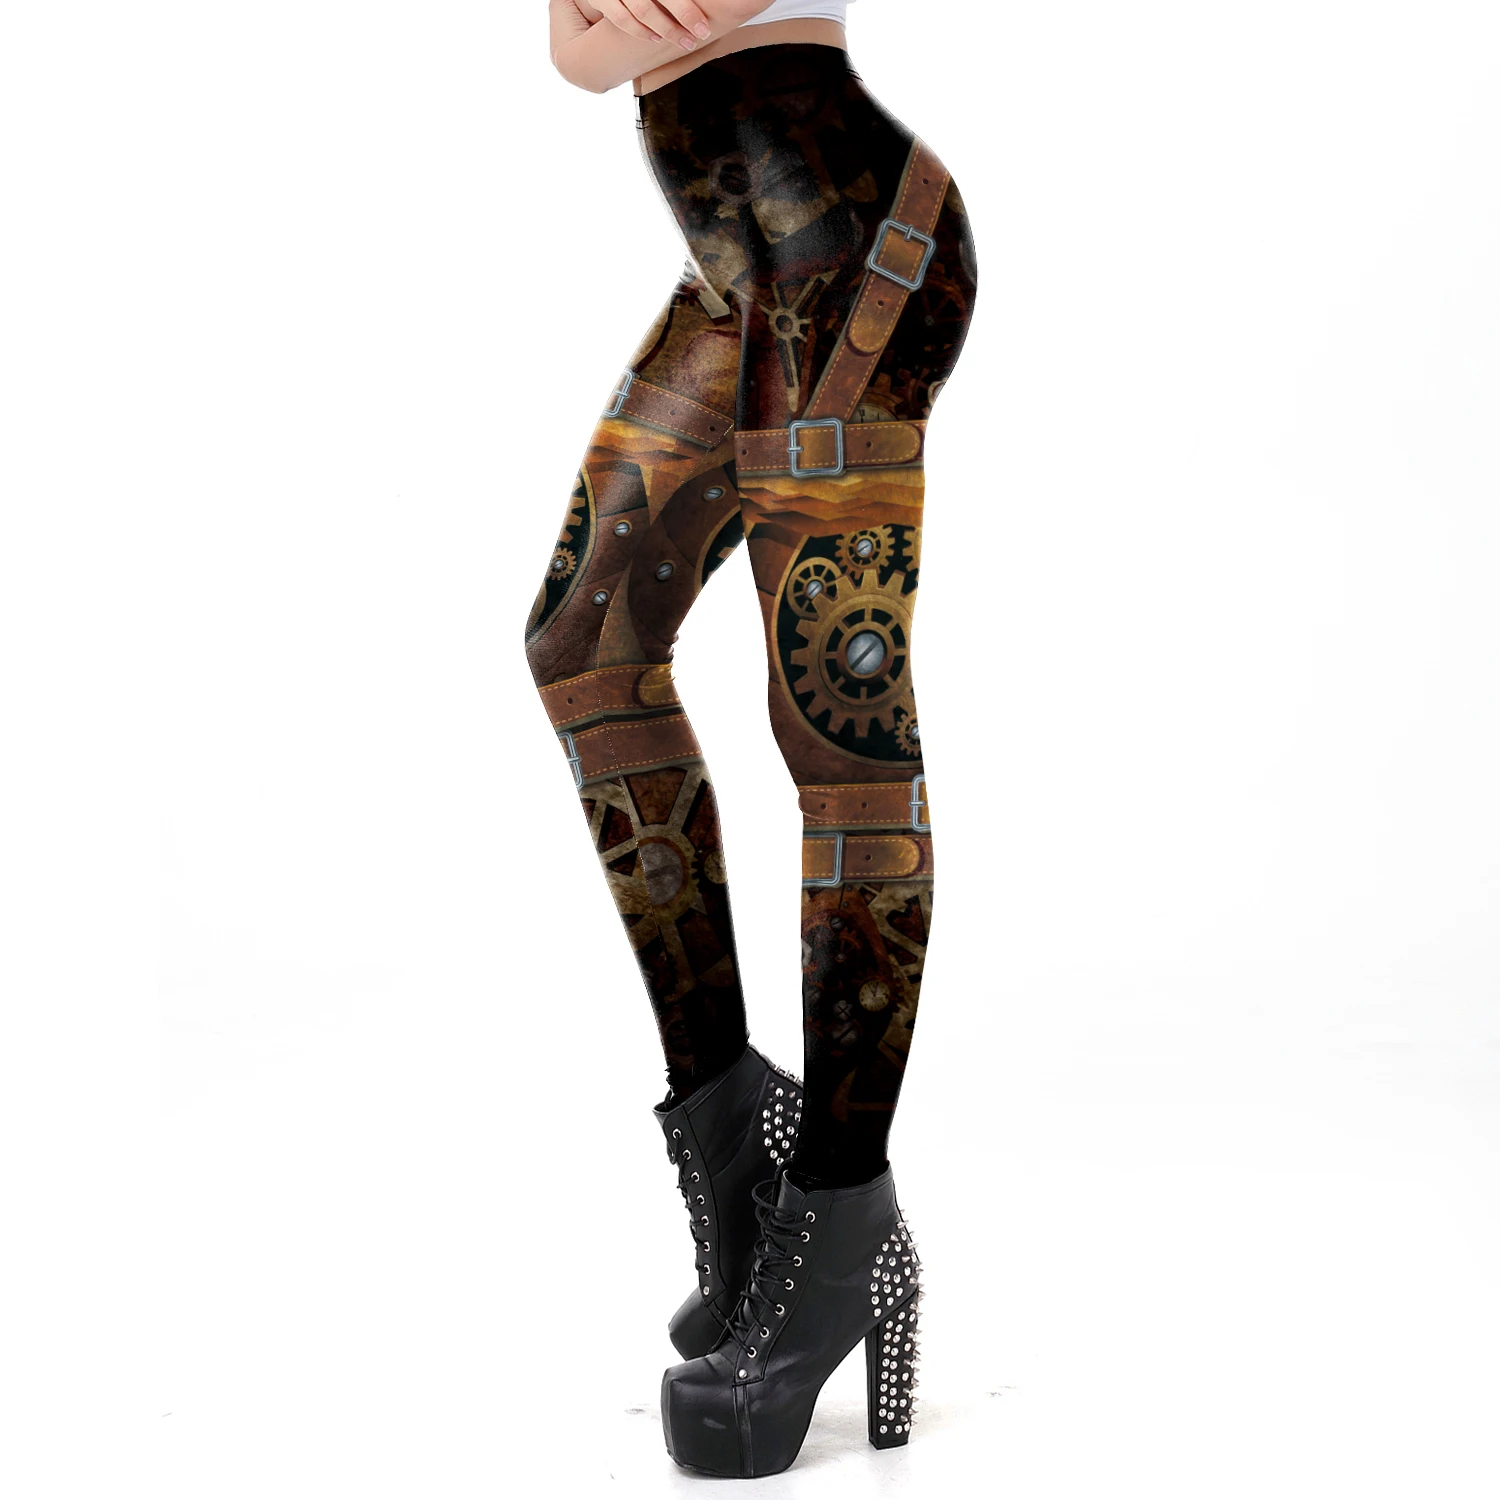 leather leggings [You're My Secret] Vintage Mechanical Gear Women Leggings Workout Pants 3D Printed Steampunk Slim Leggins Fitness Sexy Legins black leggings Leggings